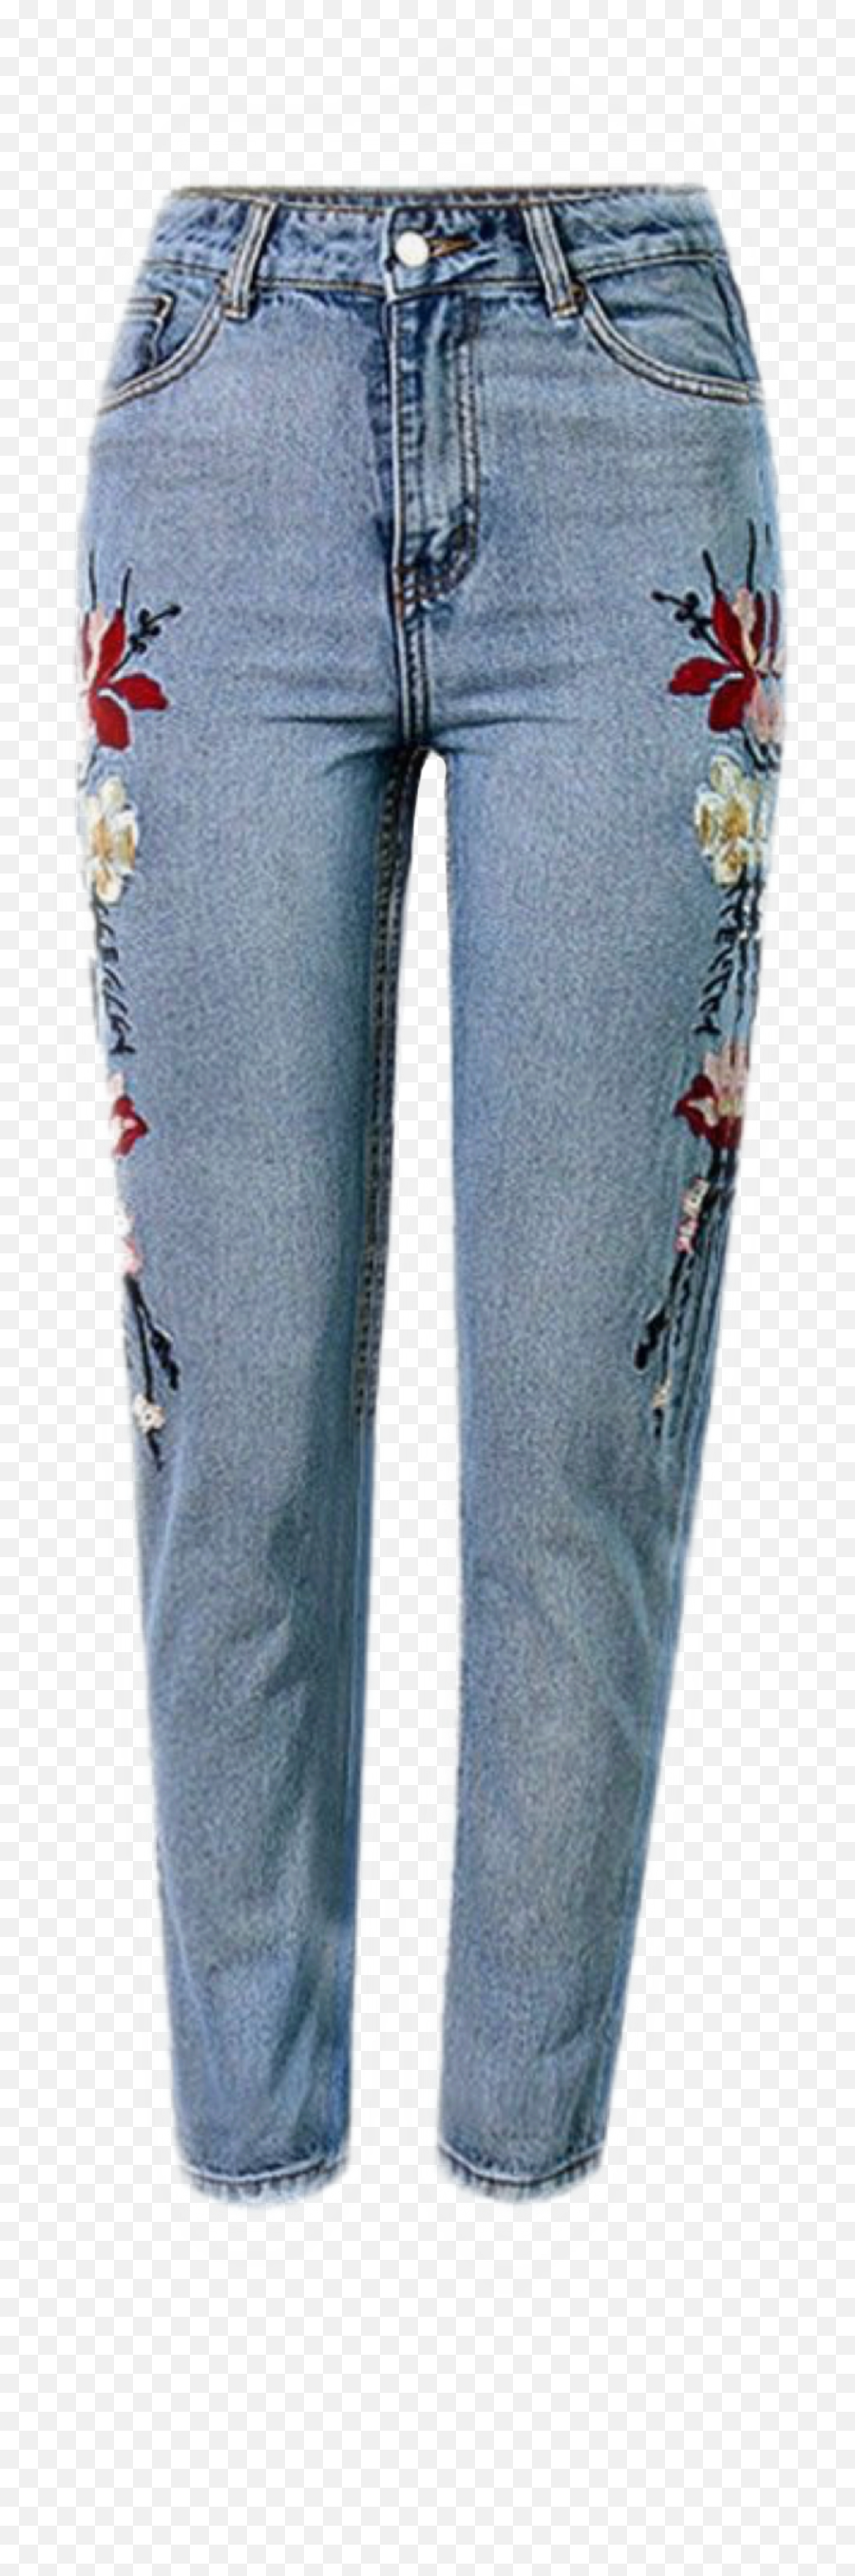 Sticker - Calça Jeans Bordada Com Flores Emoji,Emoji Print Pants